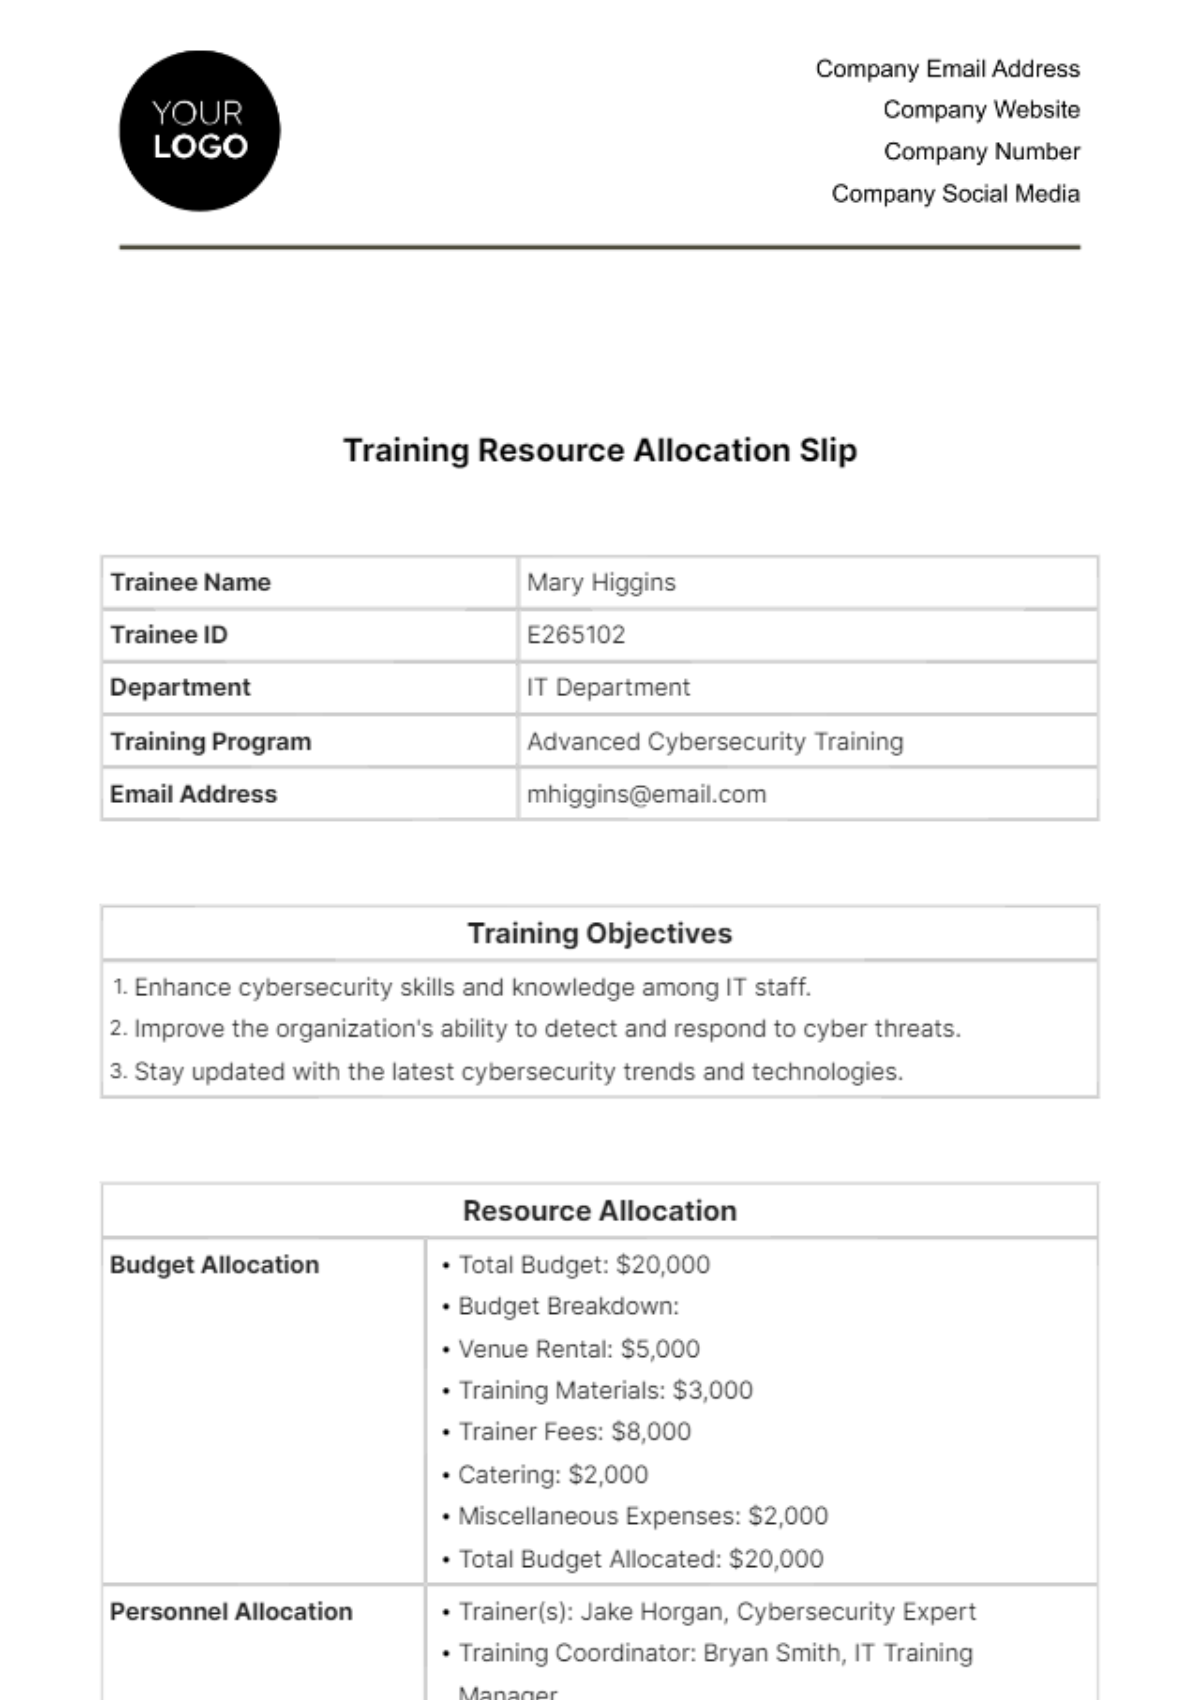 Free Training Resource Allocation Slip HR Template